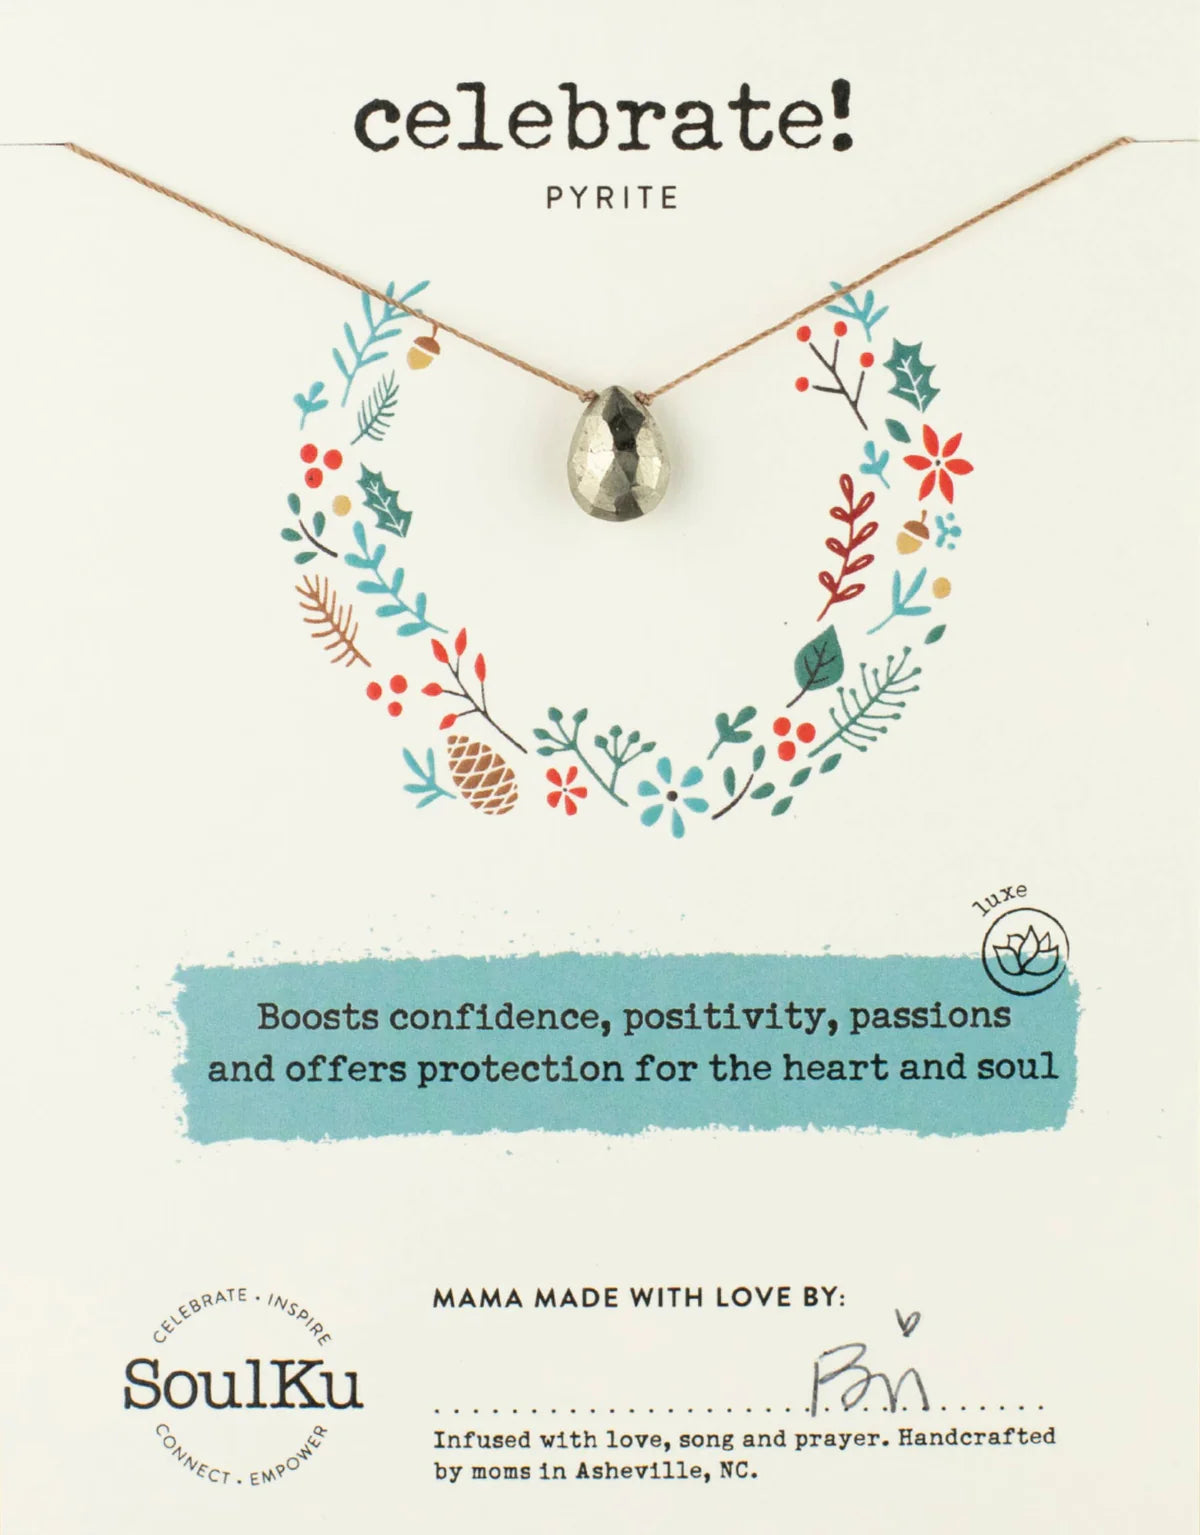 Luxe Necklace Pyrite - Celebrate!